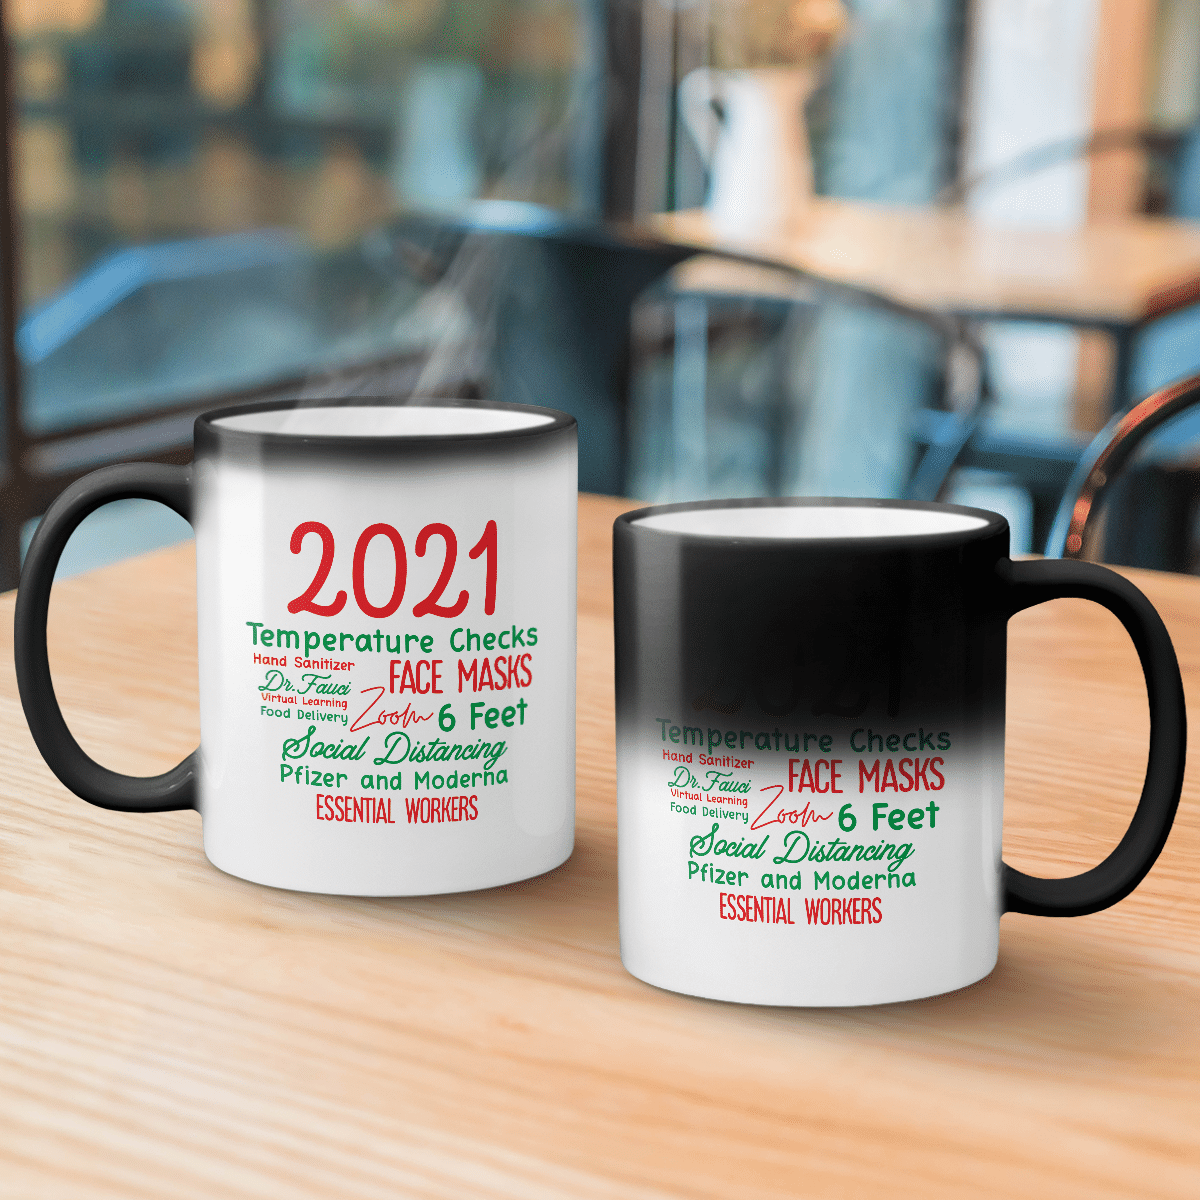 2021 Events Mug